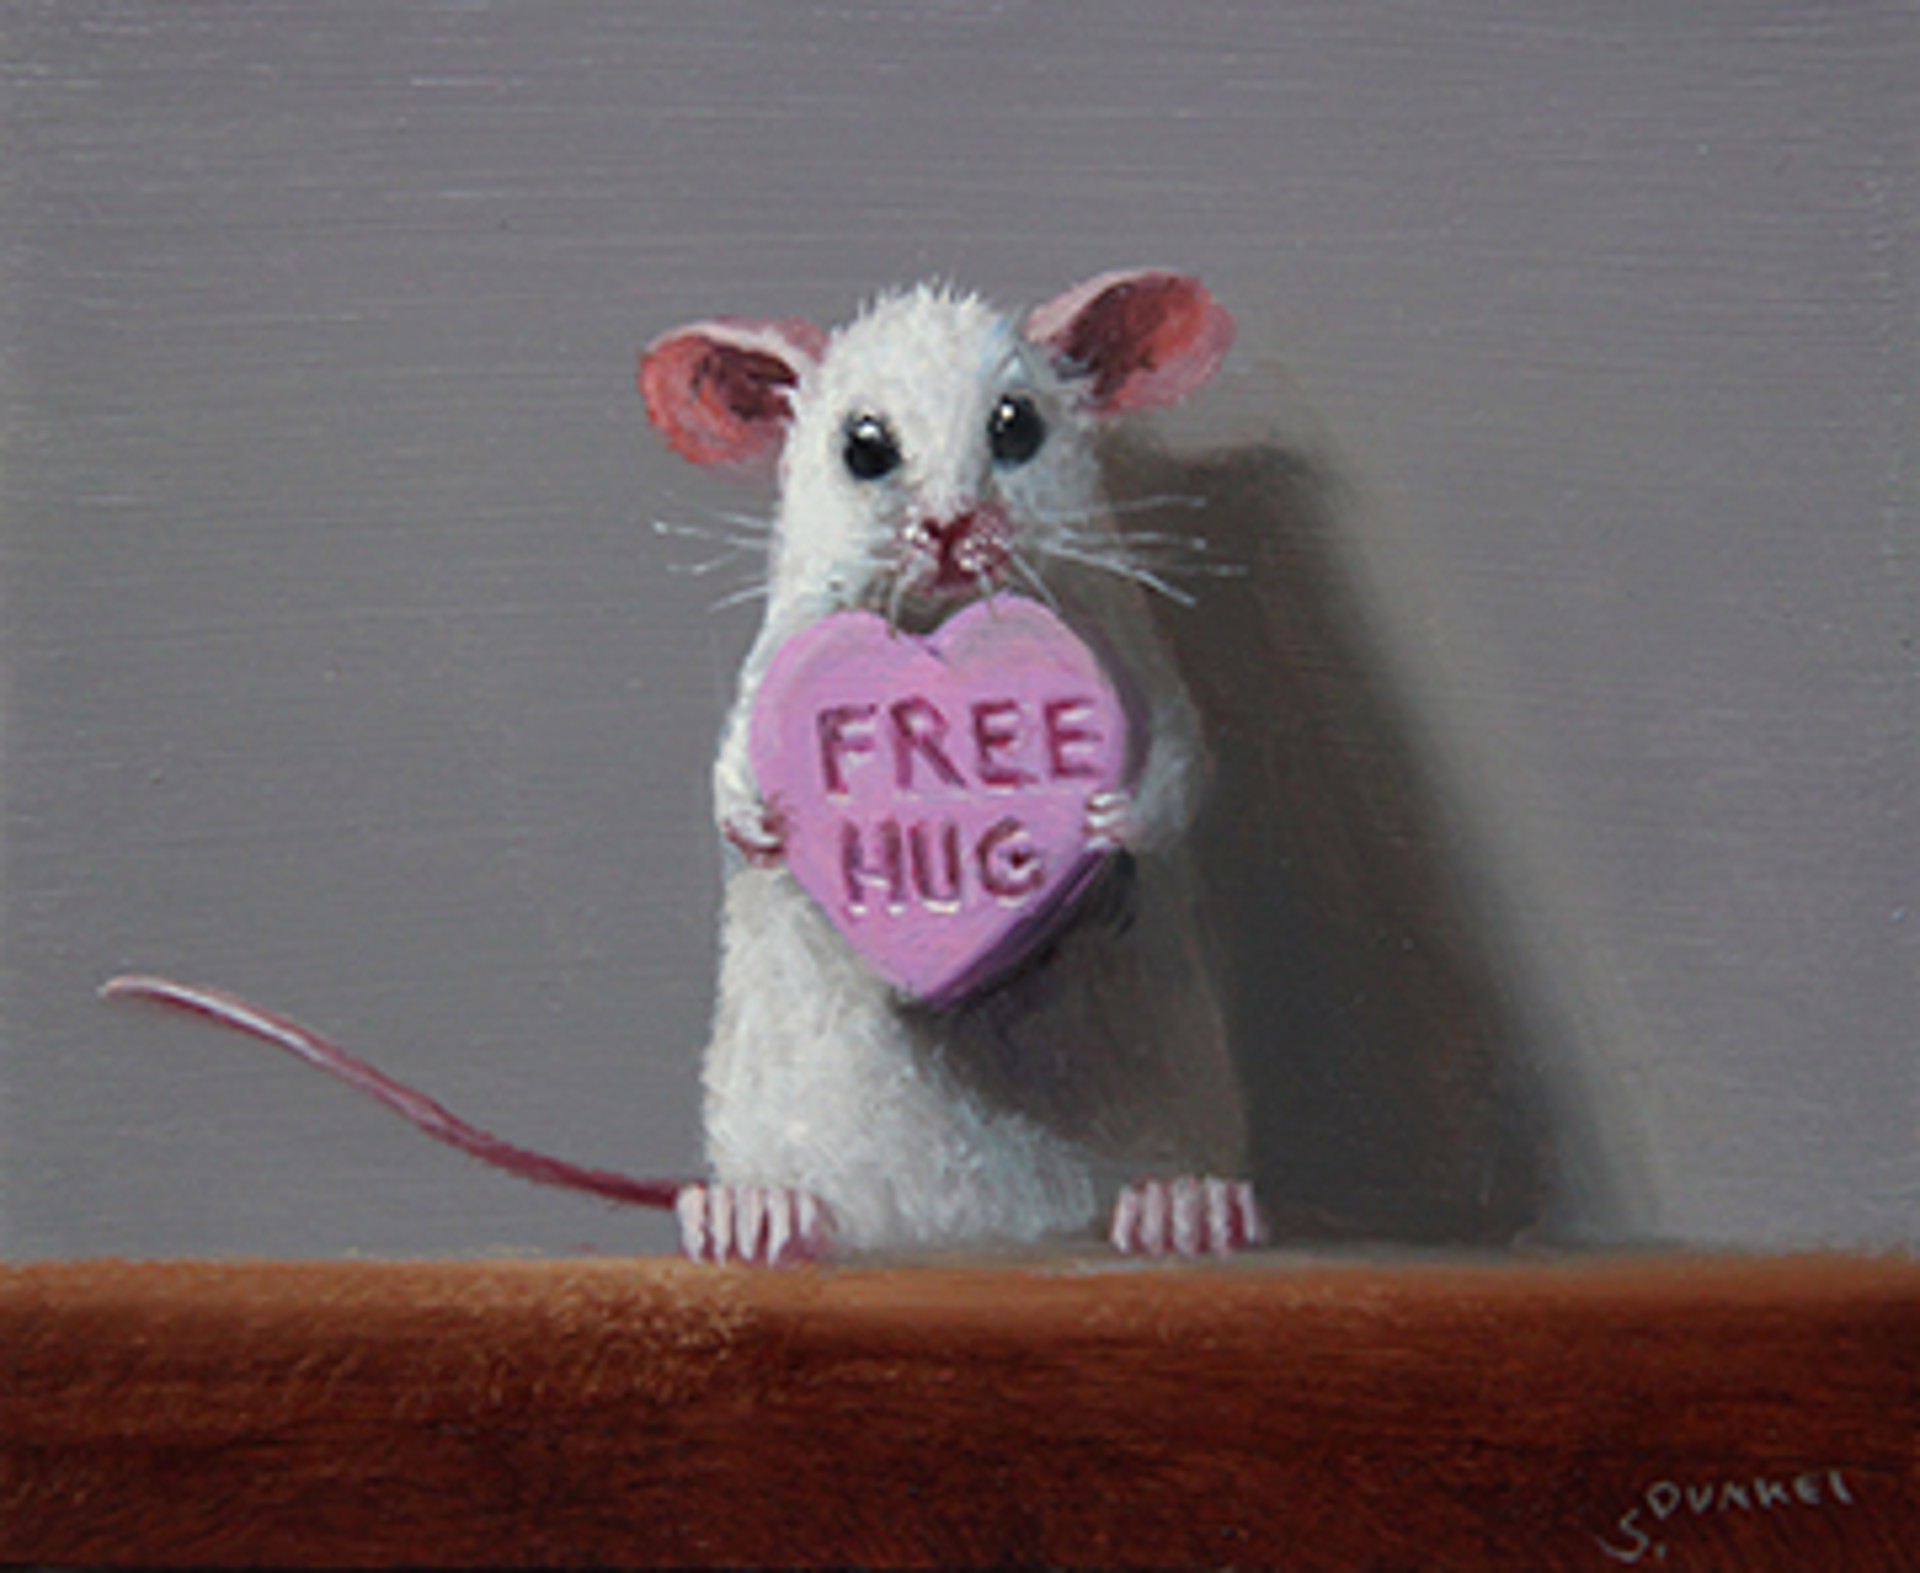 Free hug by Stuart Dunkel